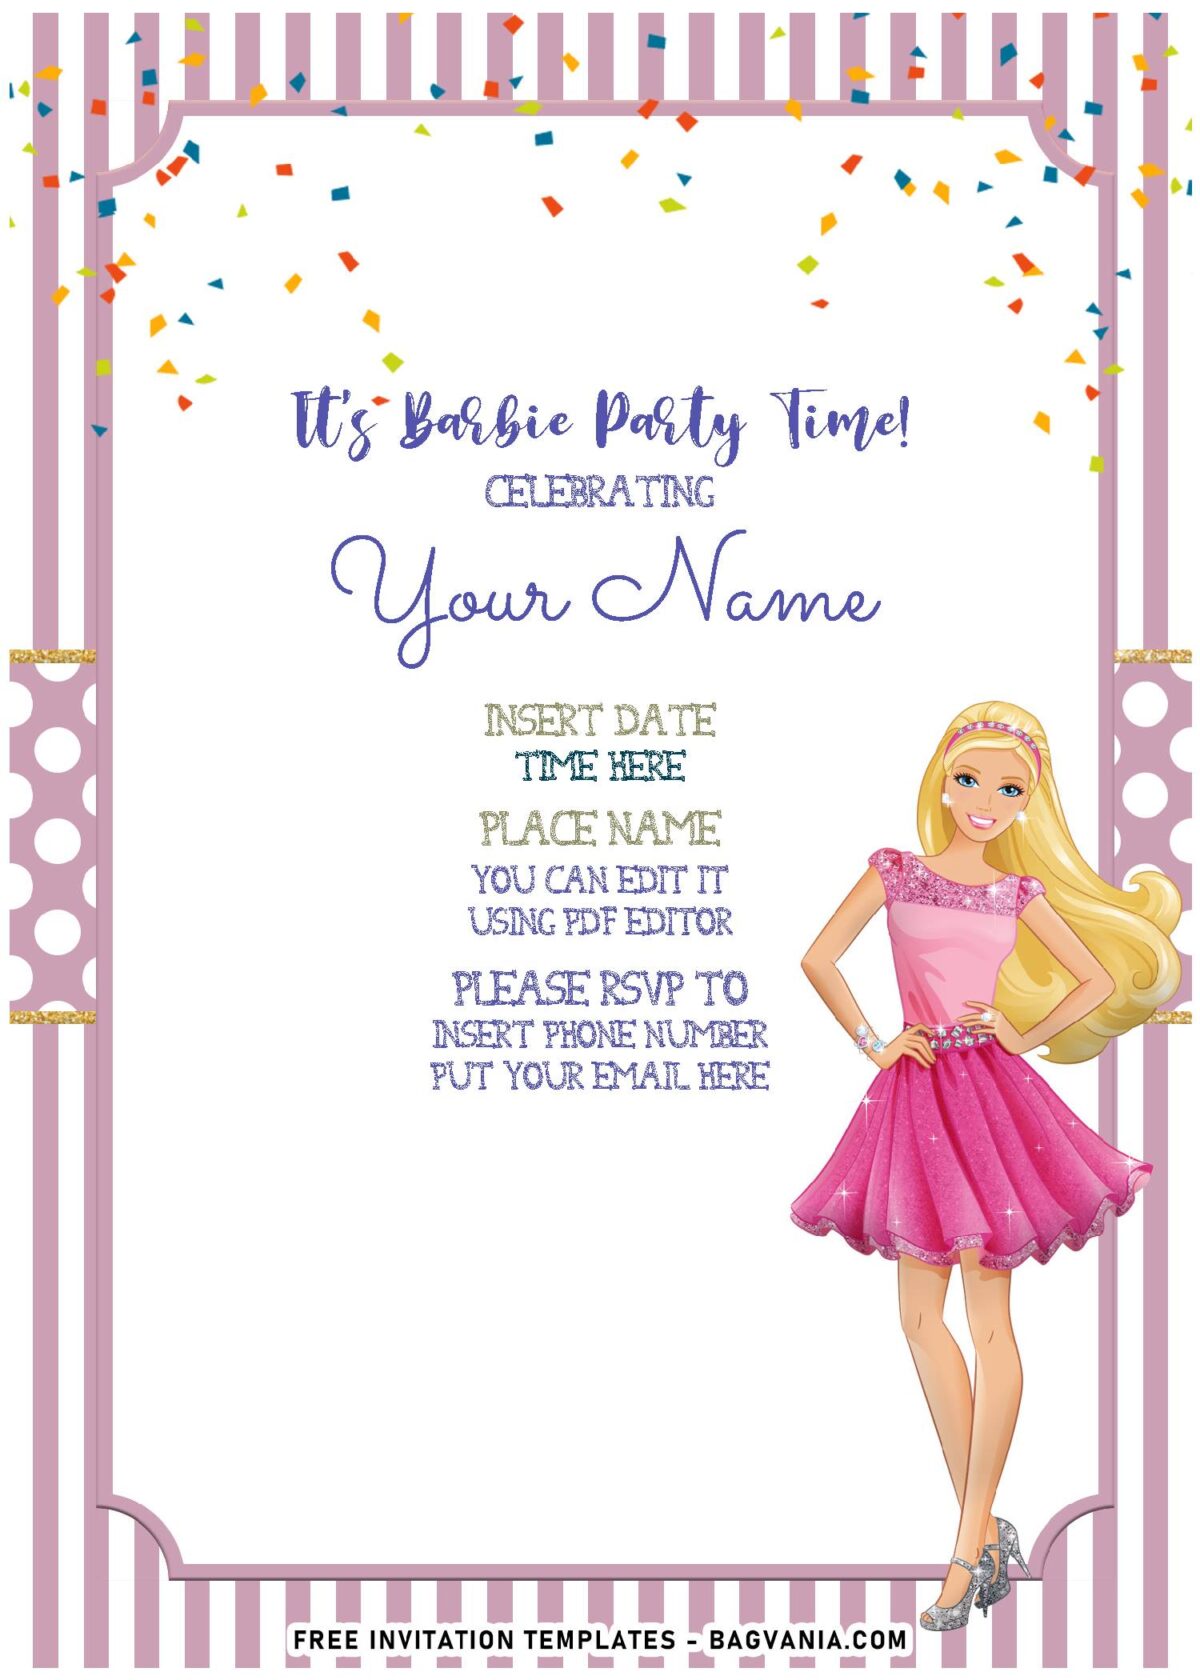 (Free Editable PDF) Festive Barbie Birthday Party Invitation Templates with cute wordings